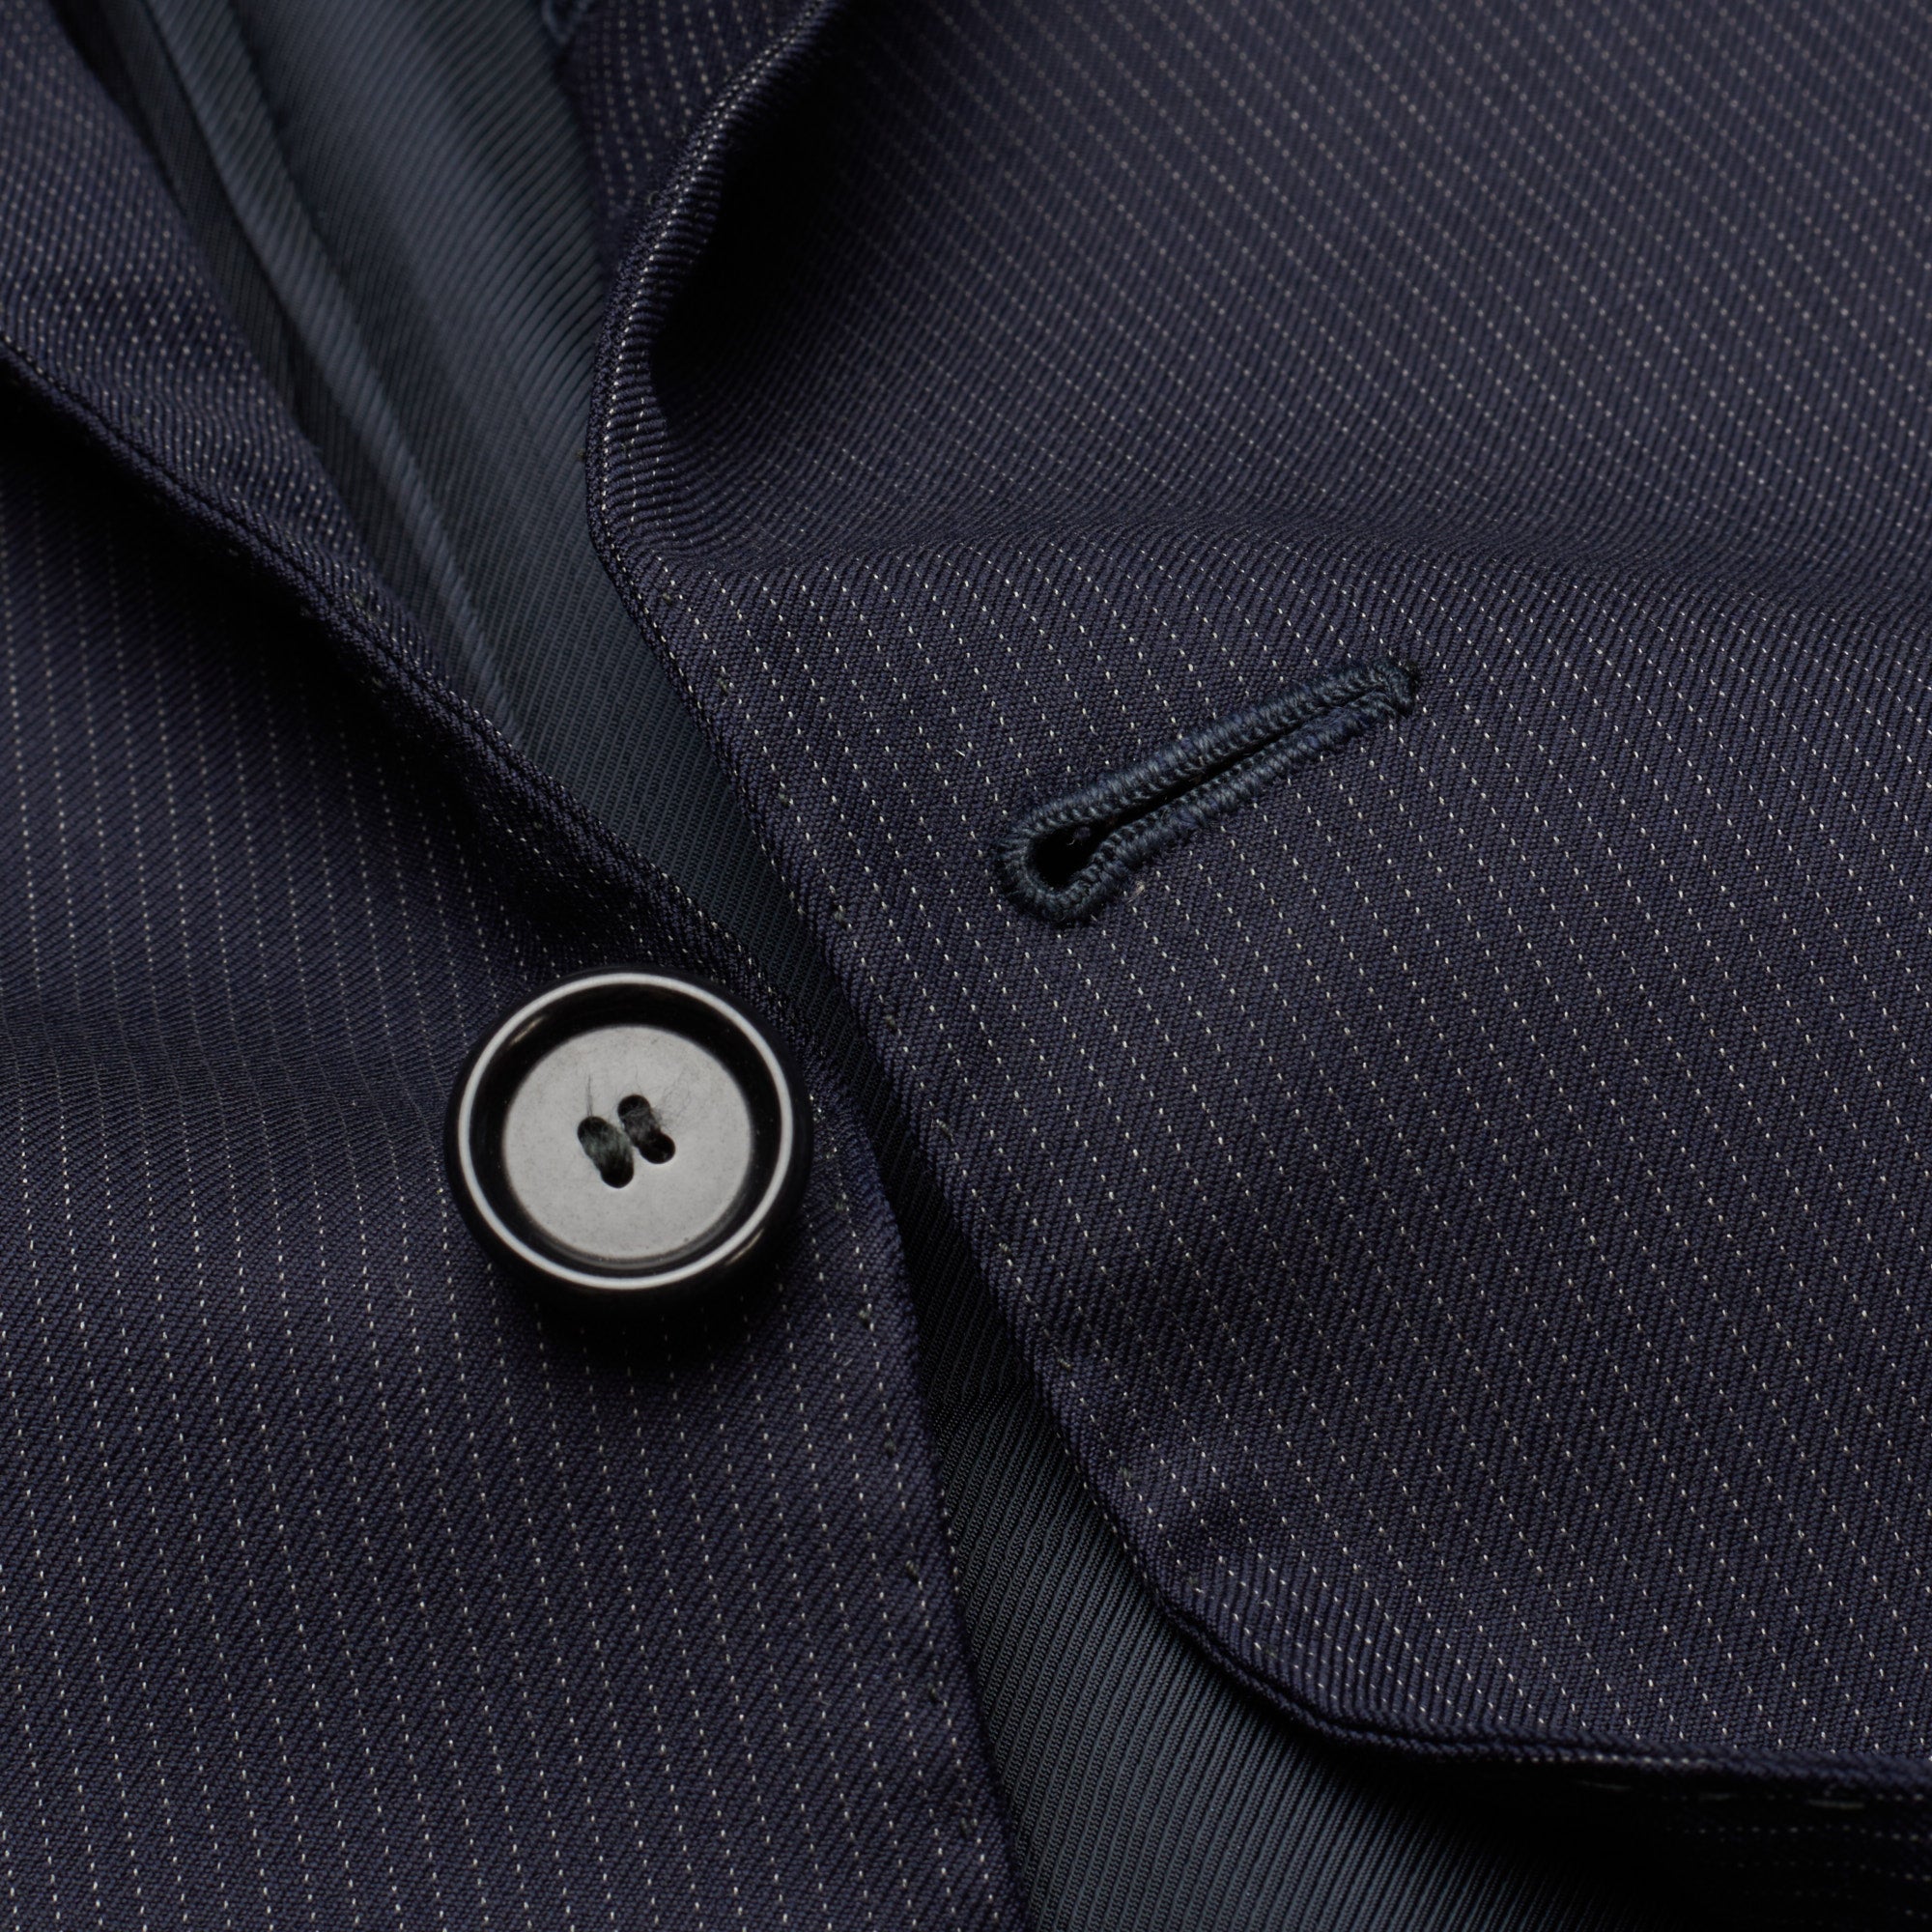 CESARE ATTOLINI Handmade Navy Blue Striped Wool Super 110's Jacket EU 48 US 38 CESARE ATTOLINI